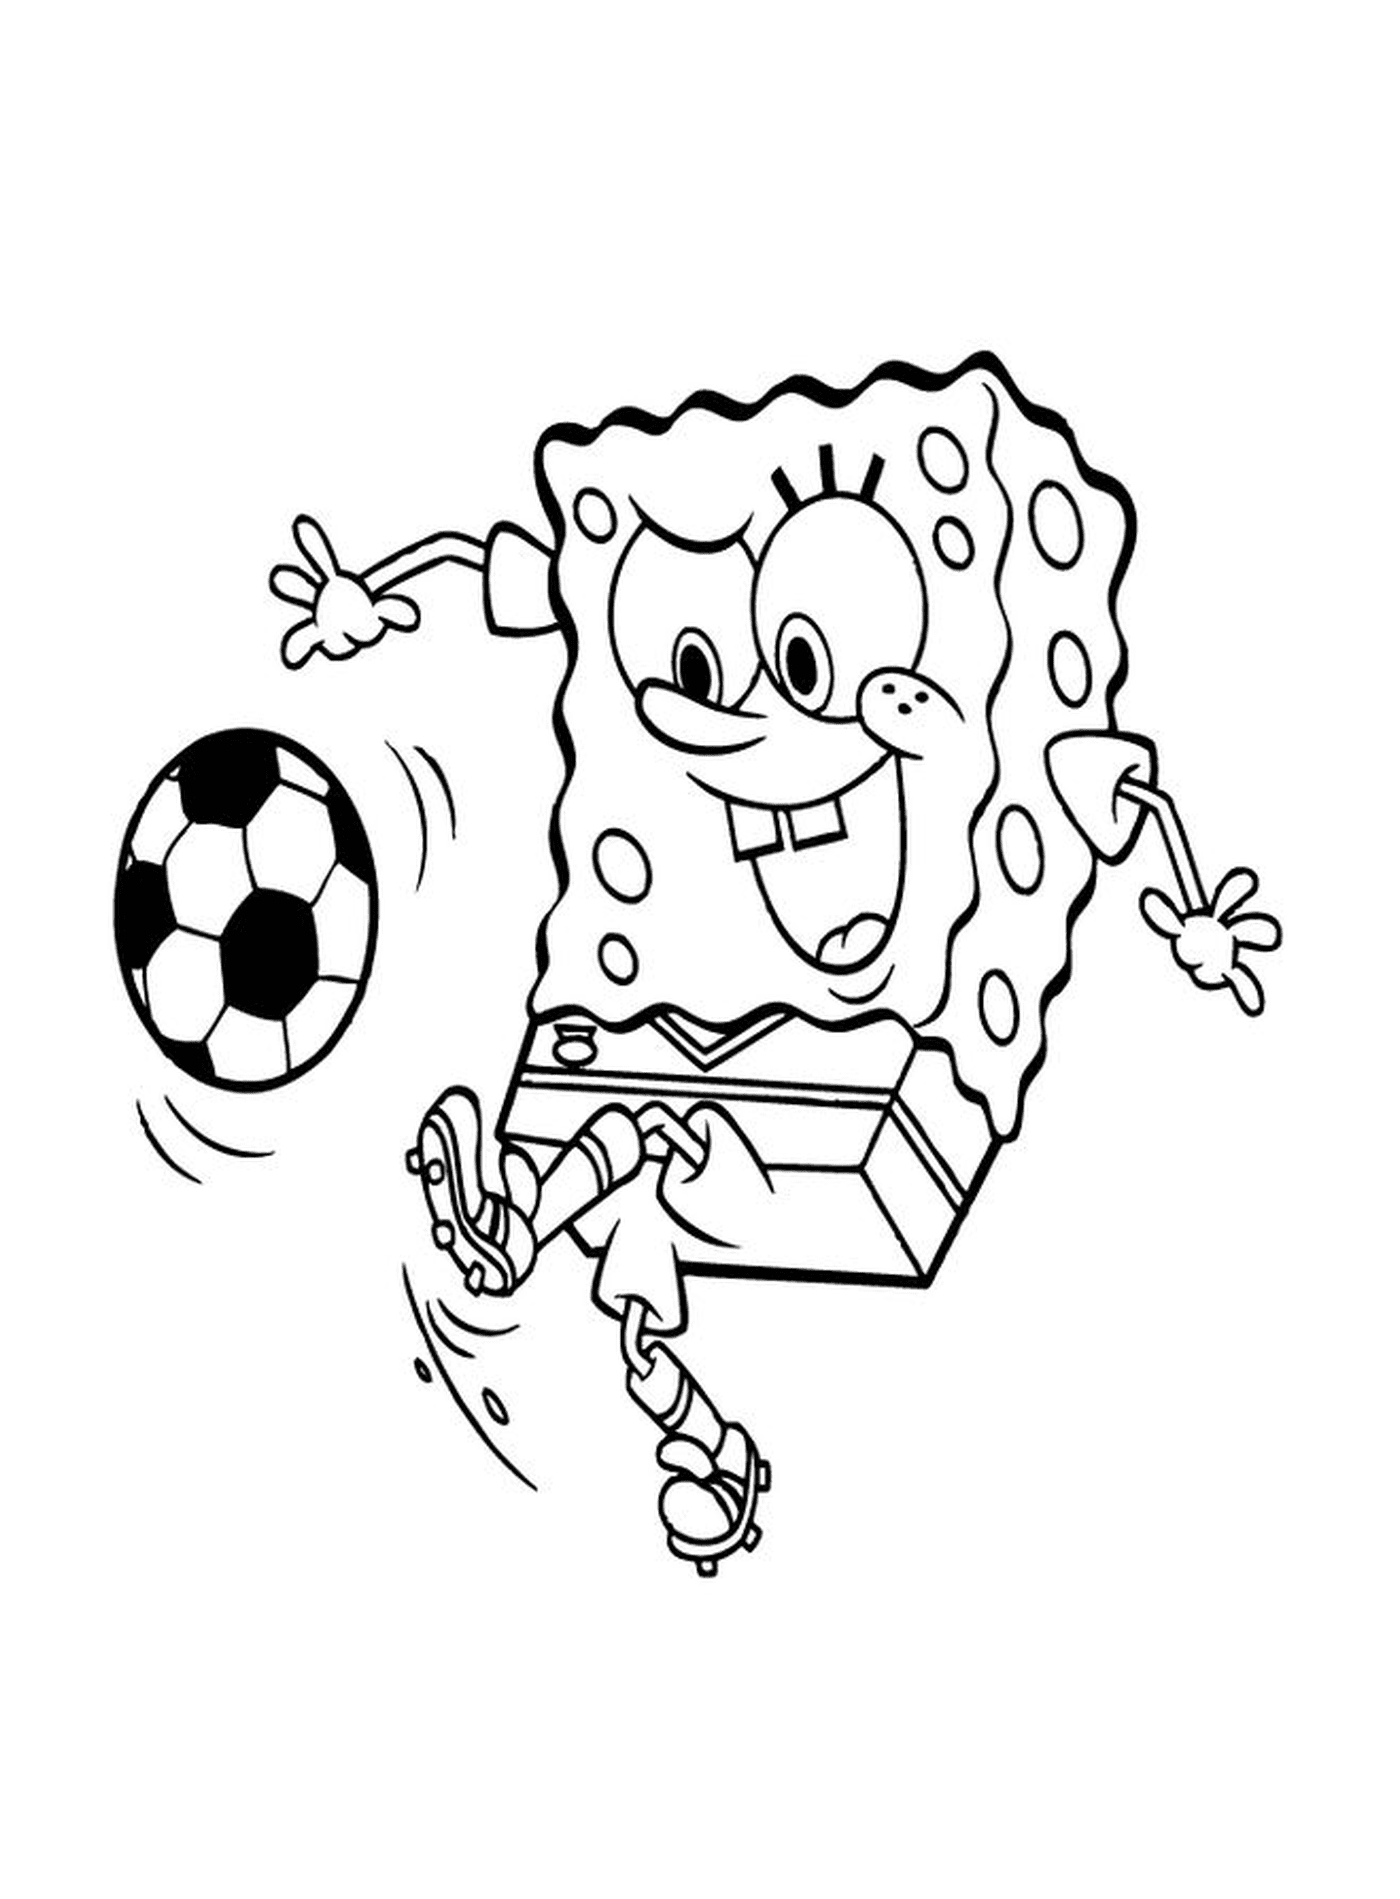  Spongebob 踢足球 